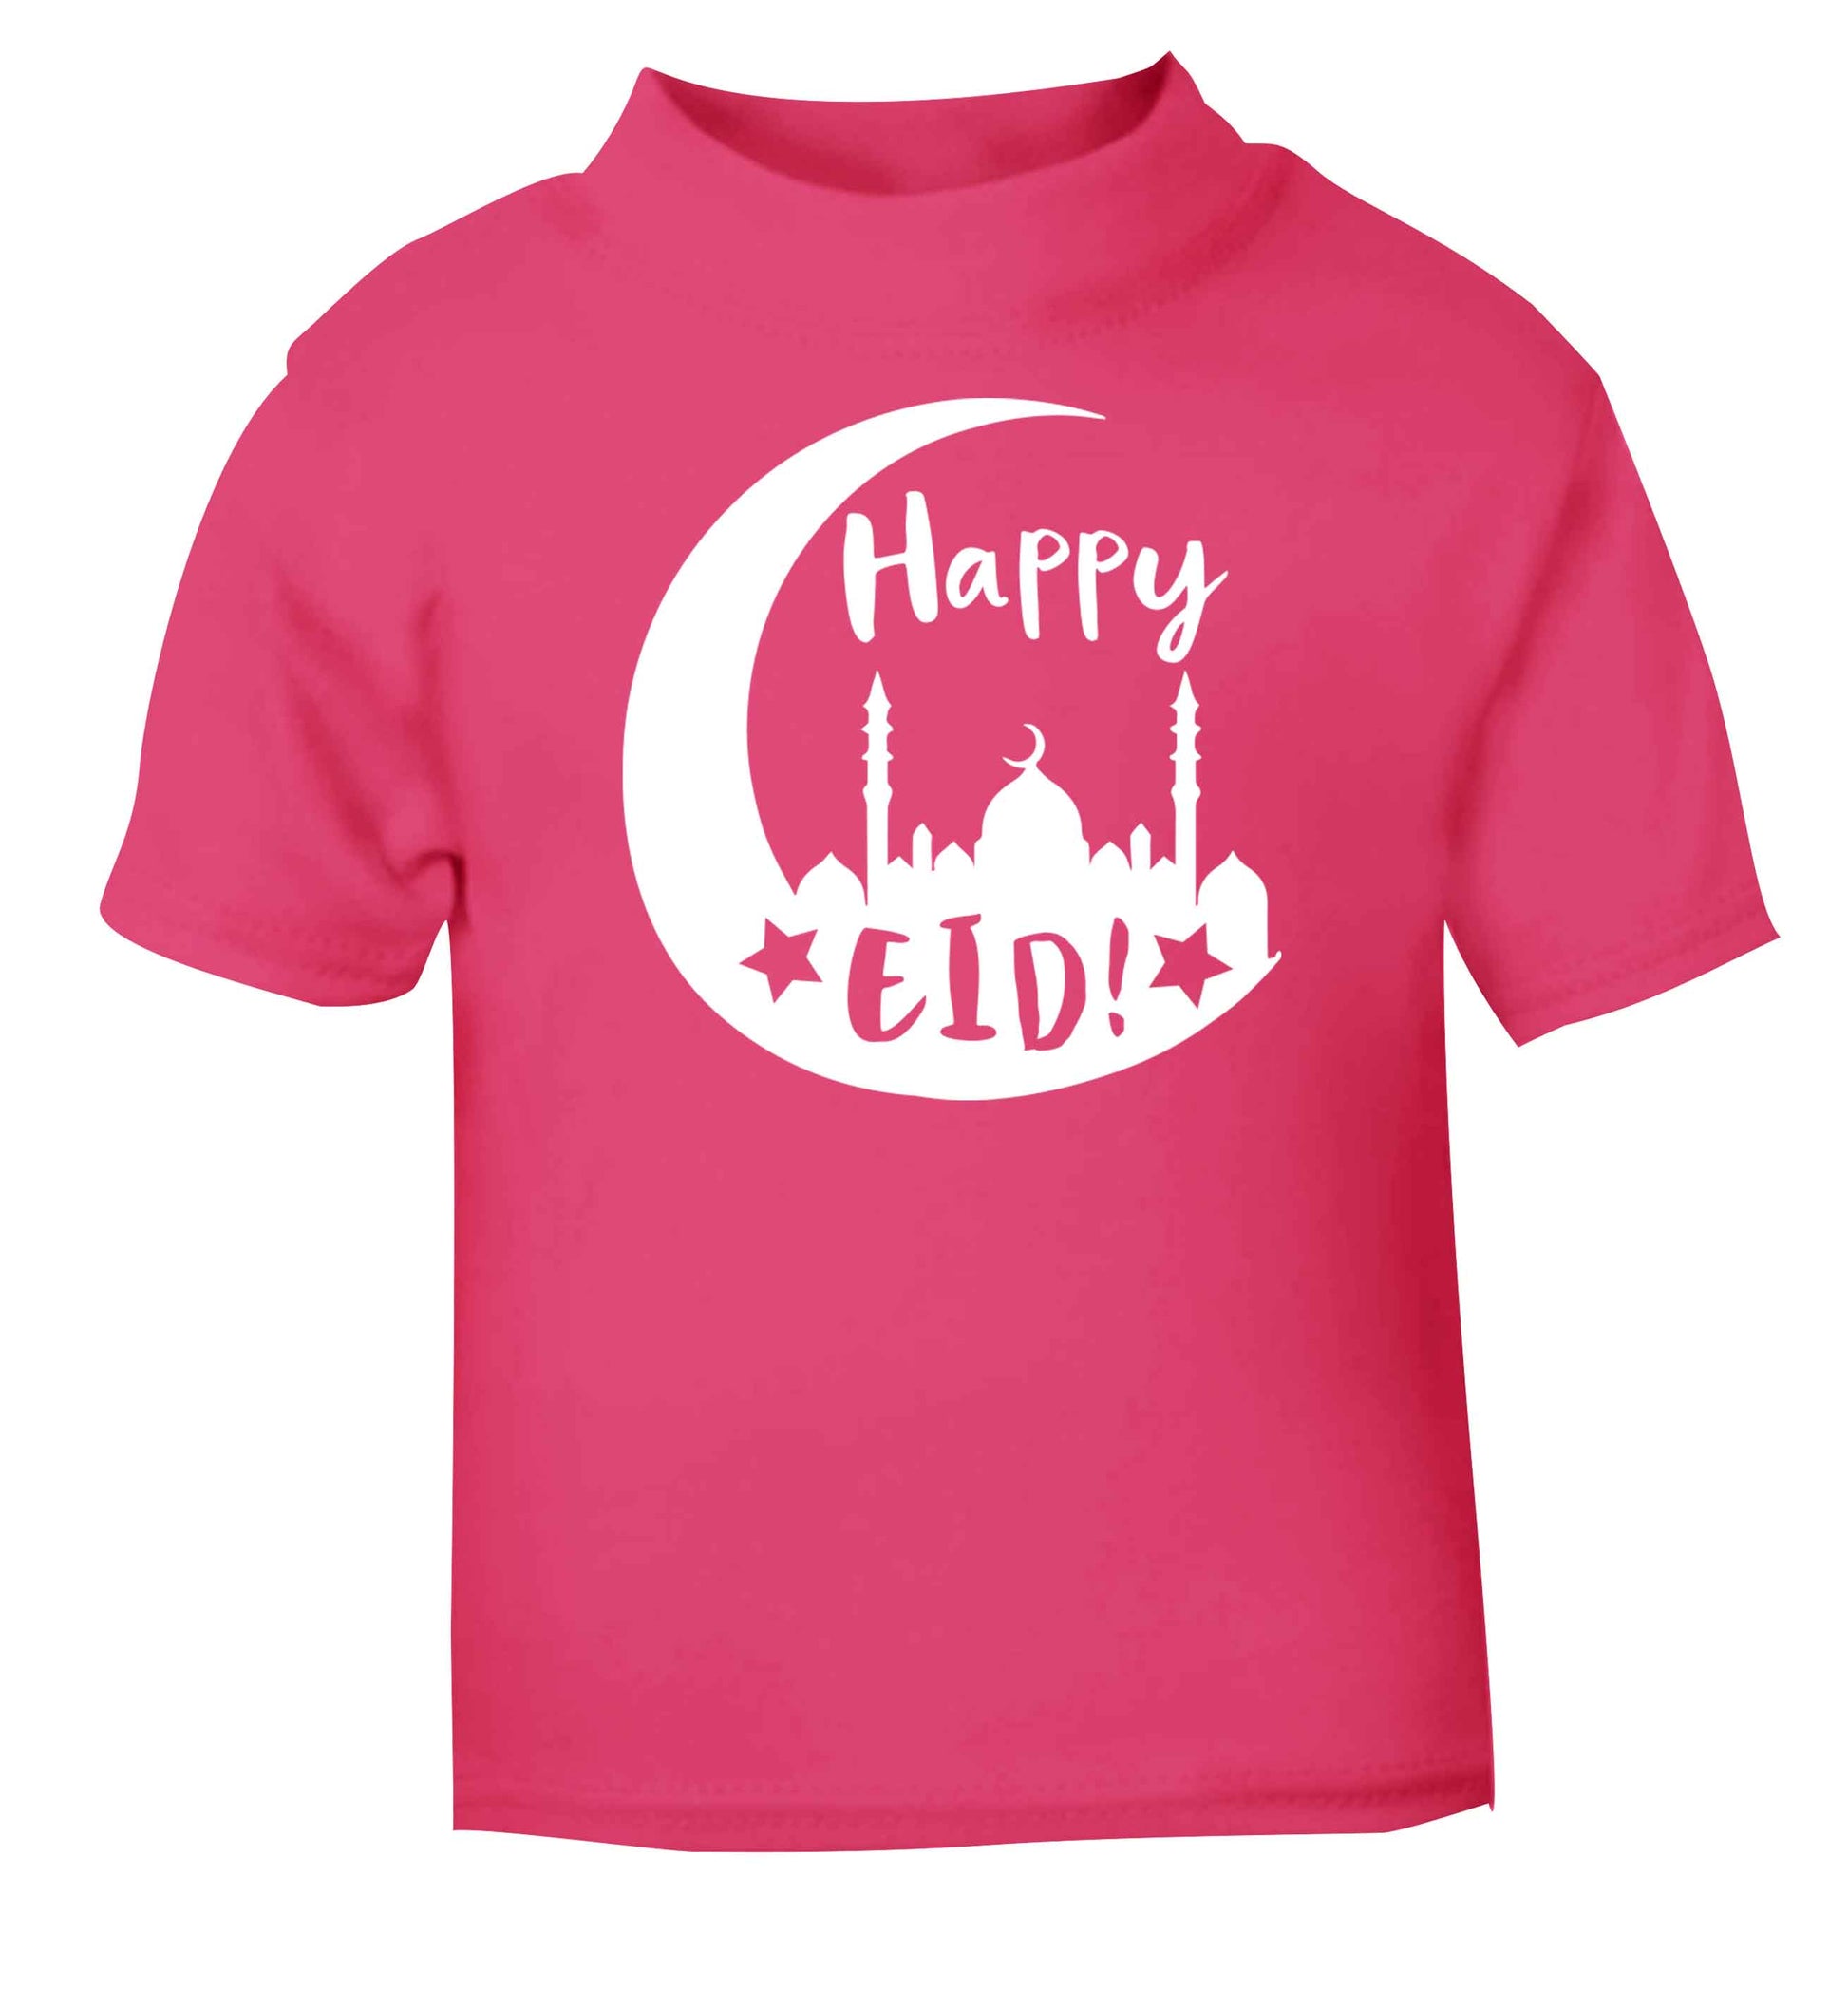 Happy Eid pink baby toddler Tshirt 2 Years